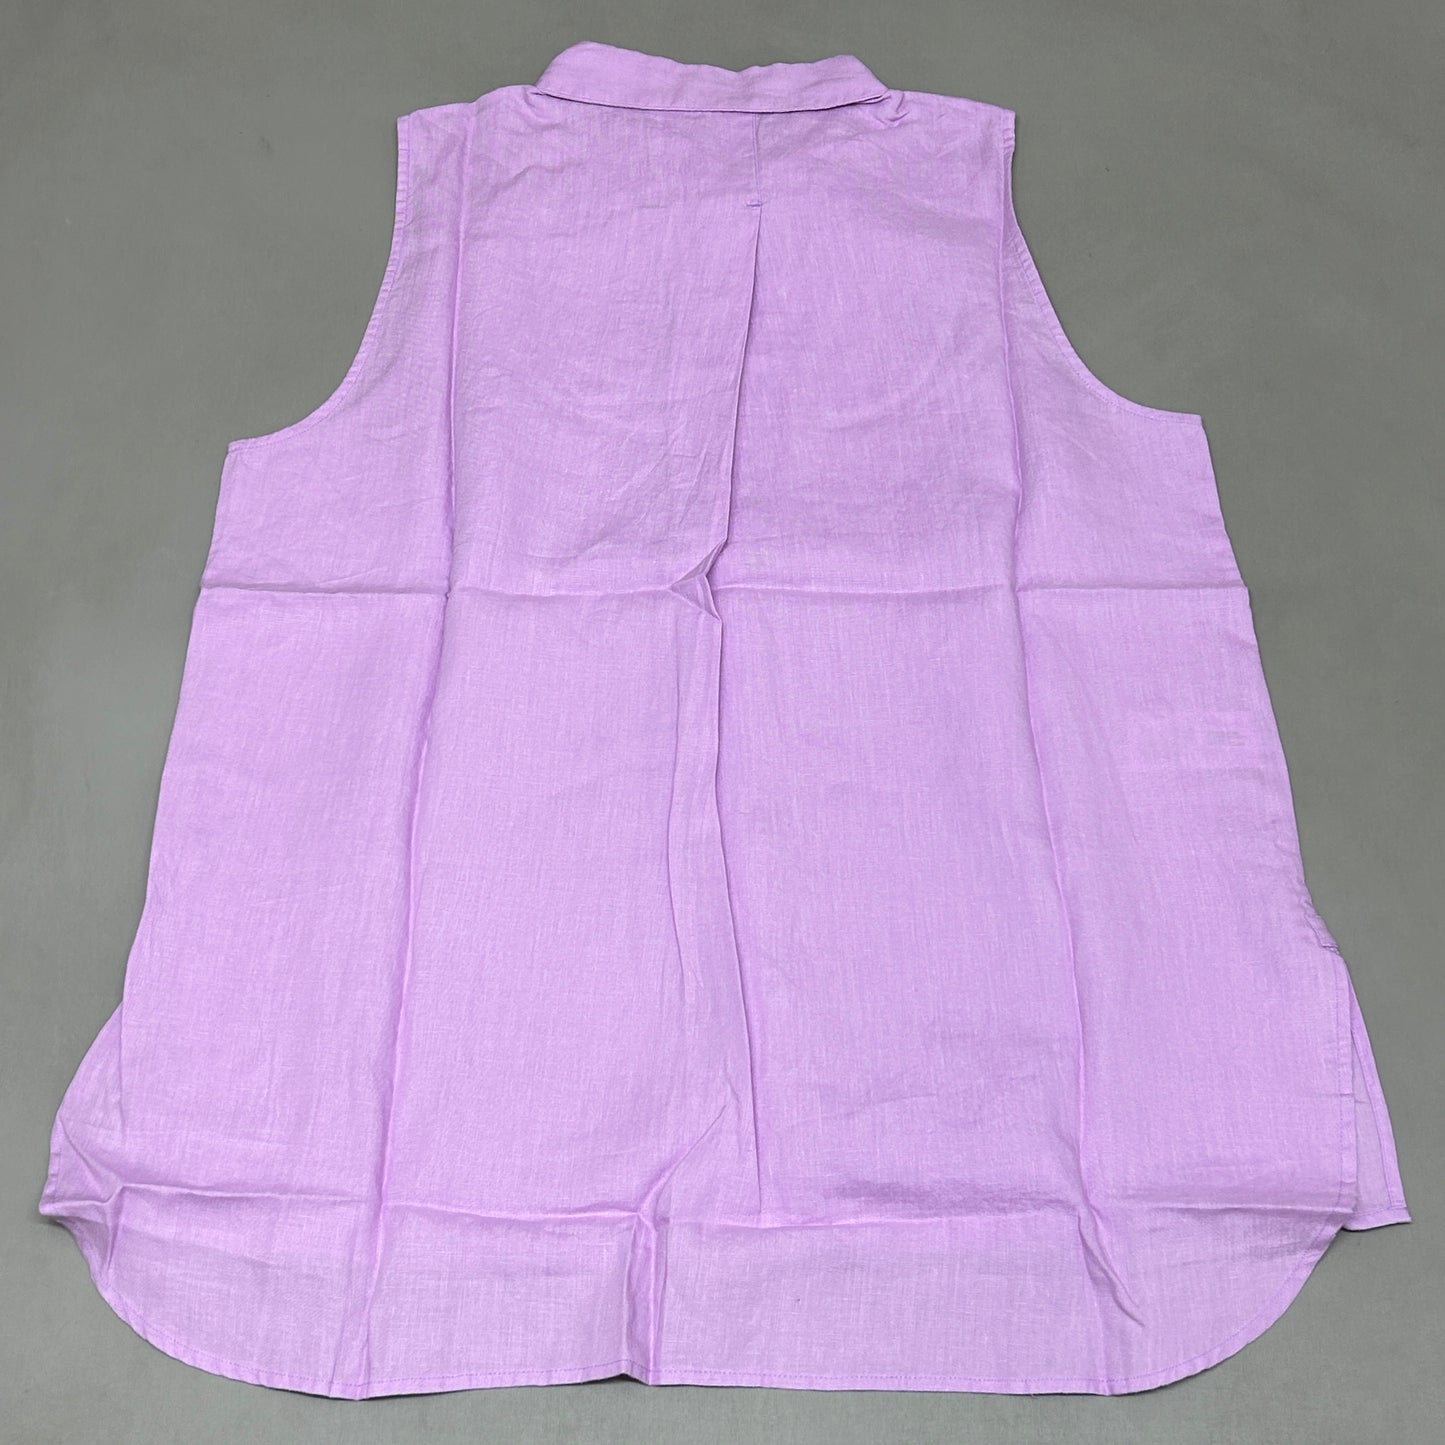 TOMMY BAHAMA Women's Coastalina Shirt Sleeveless Charming Rose Size L(New)